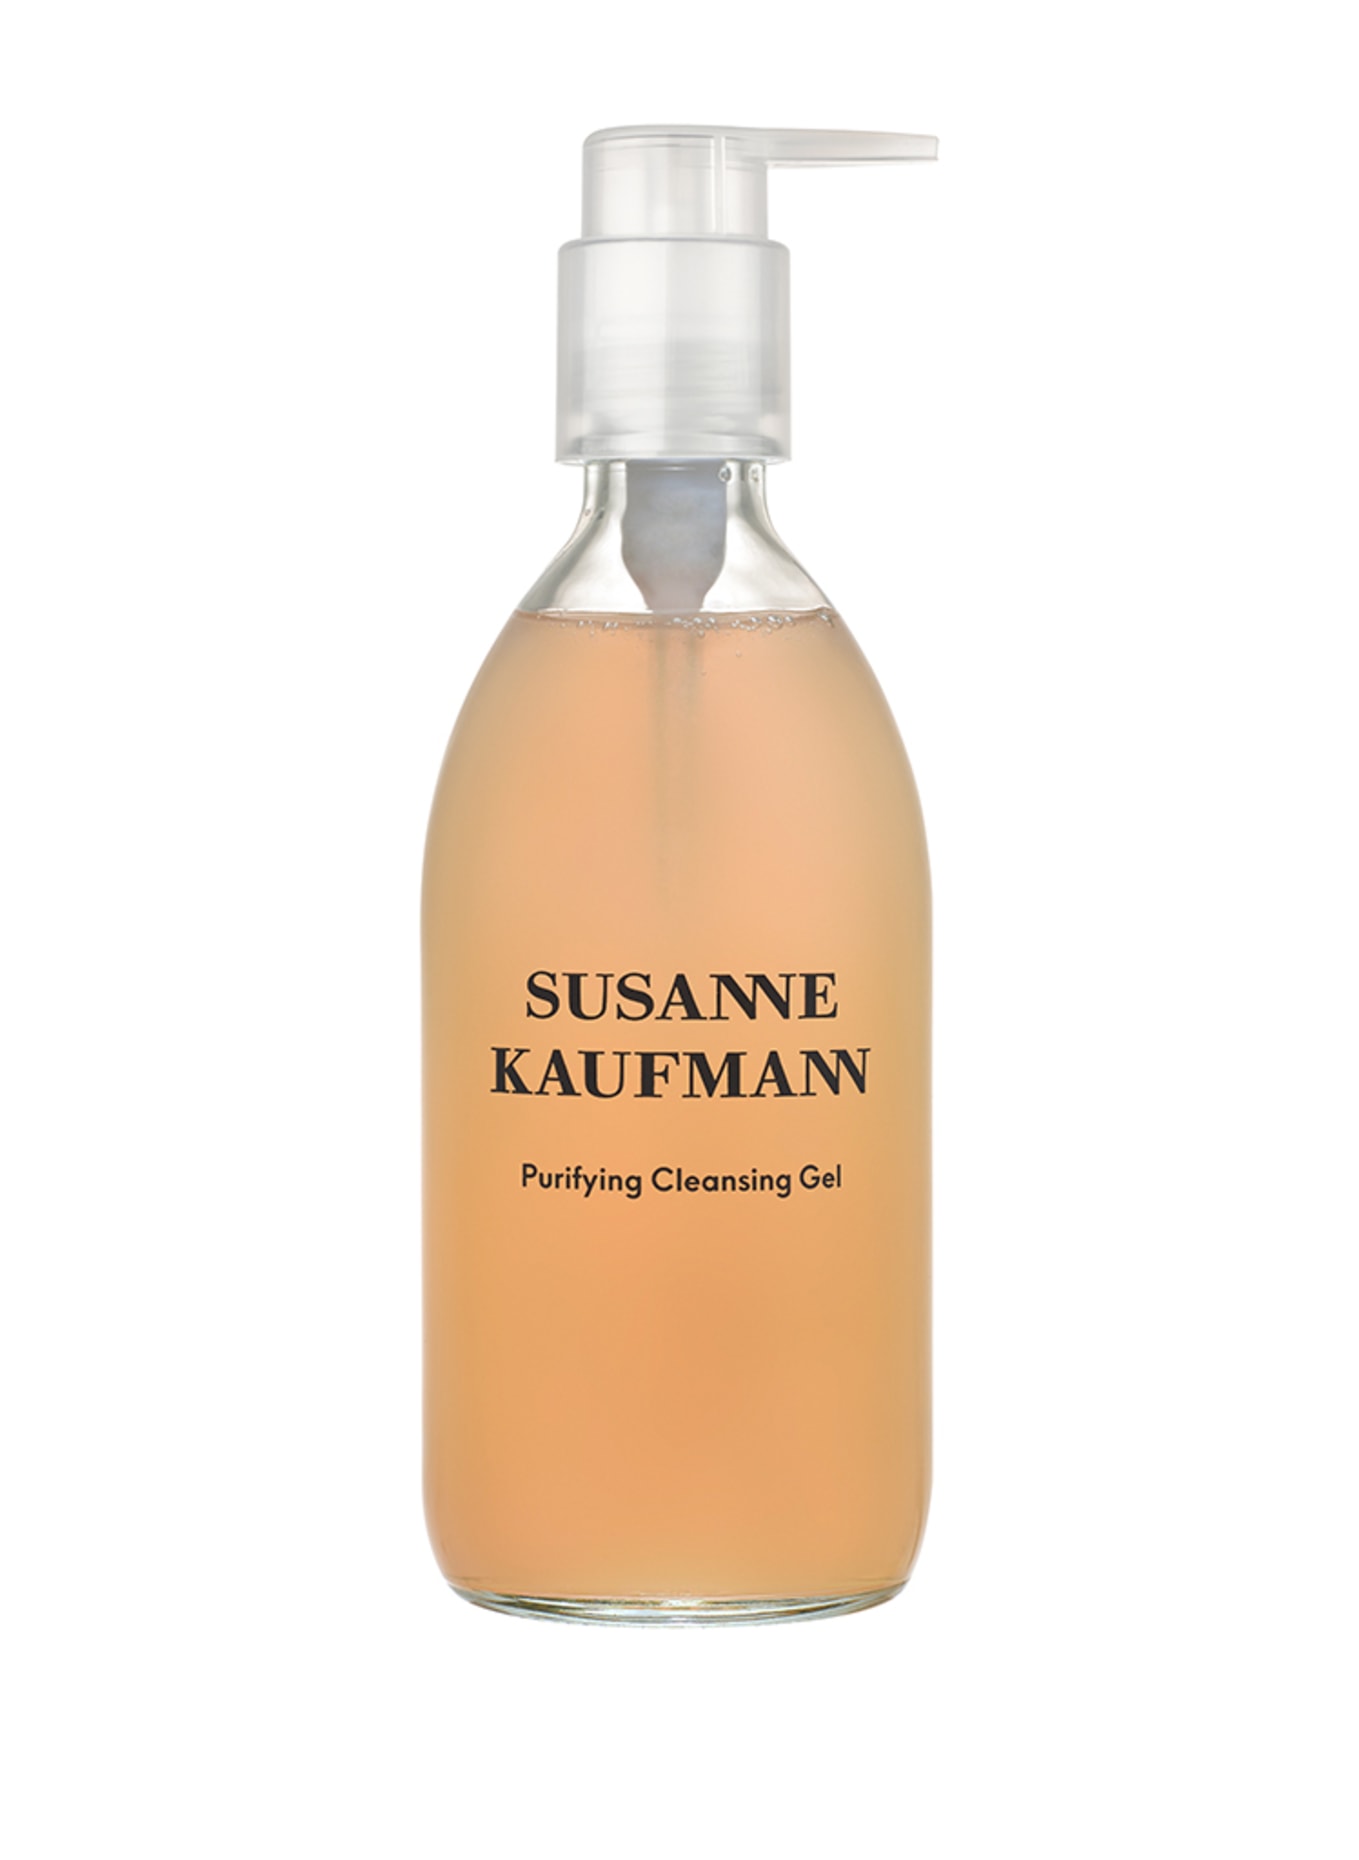 SUSANNE KAUFMANN PURIFYING CLEANSING GEL (Bild 1)